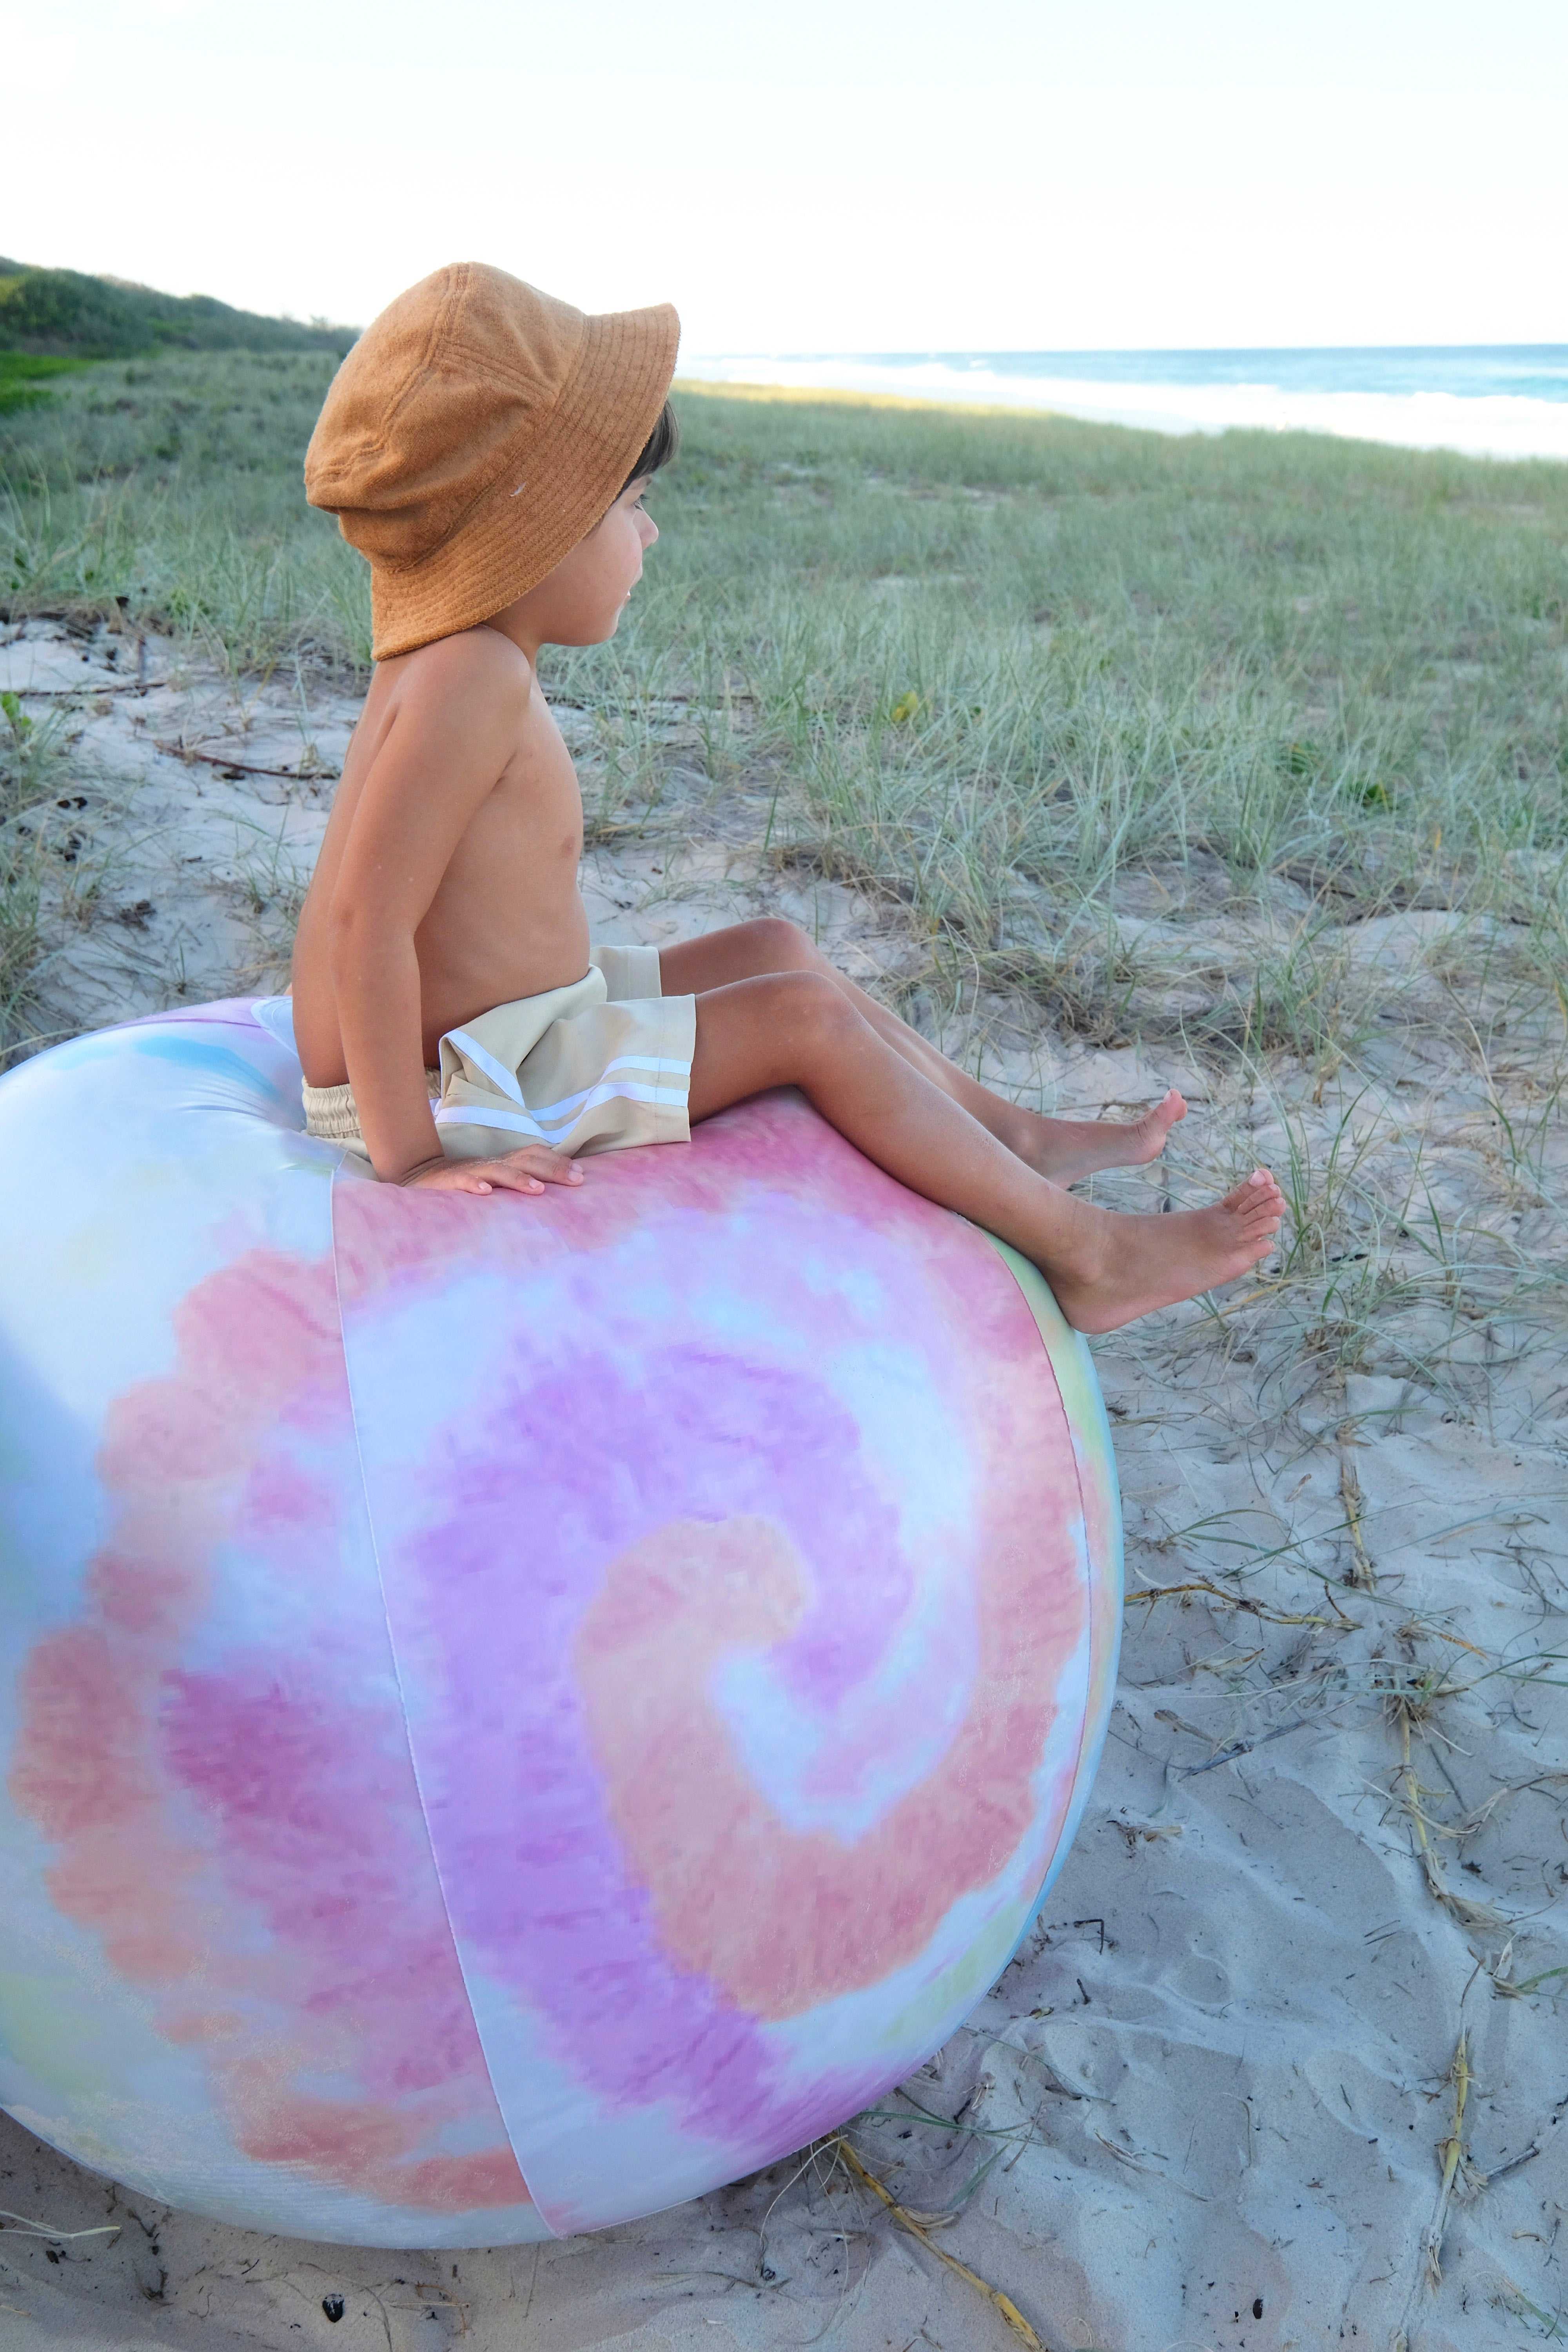 Giant Inflatable Beach Ball Tie Dye Tie Dye